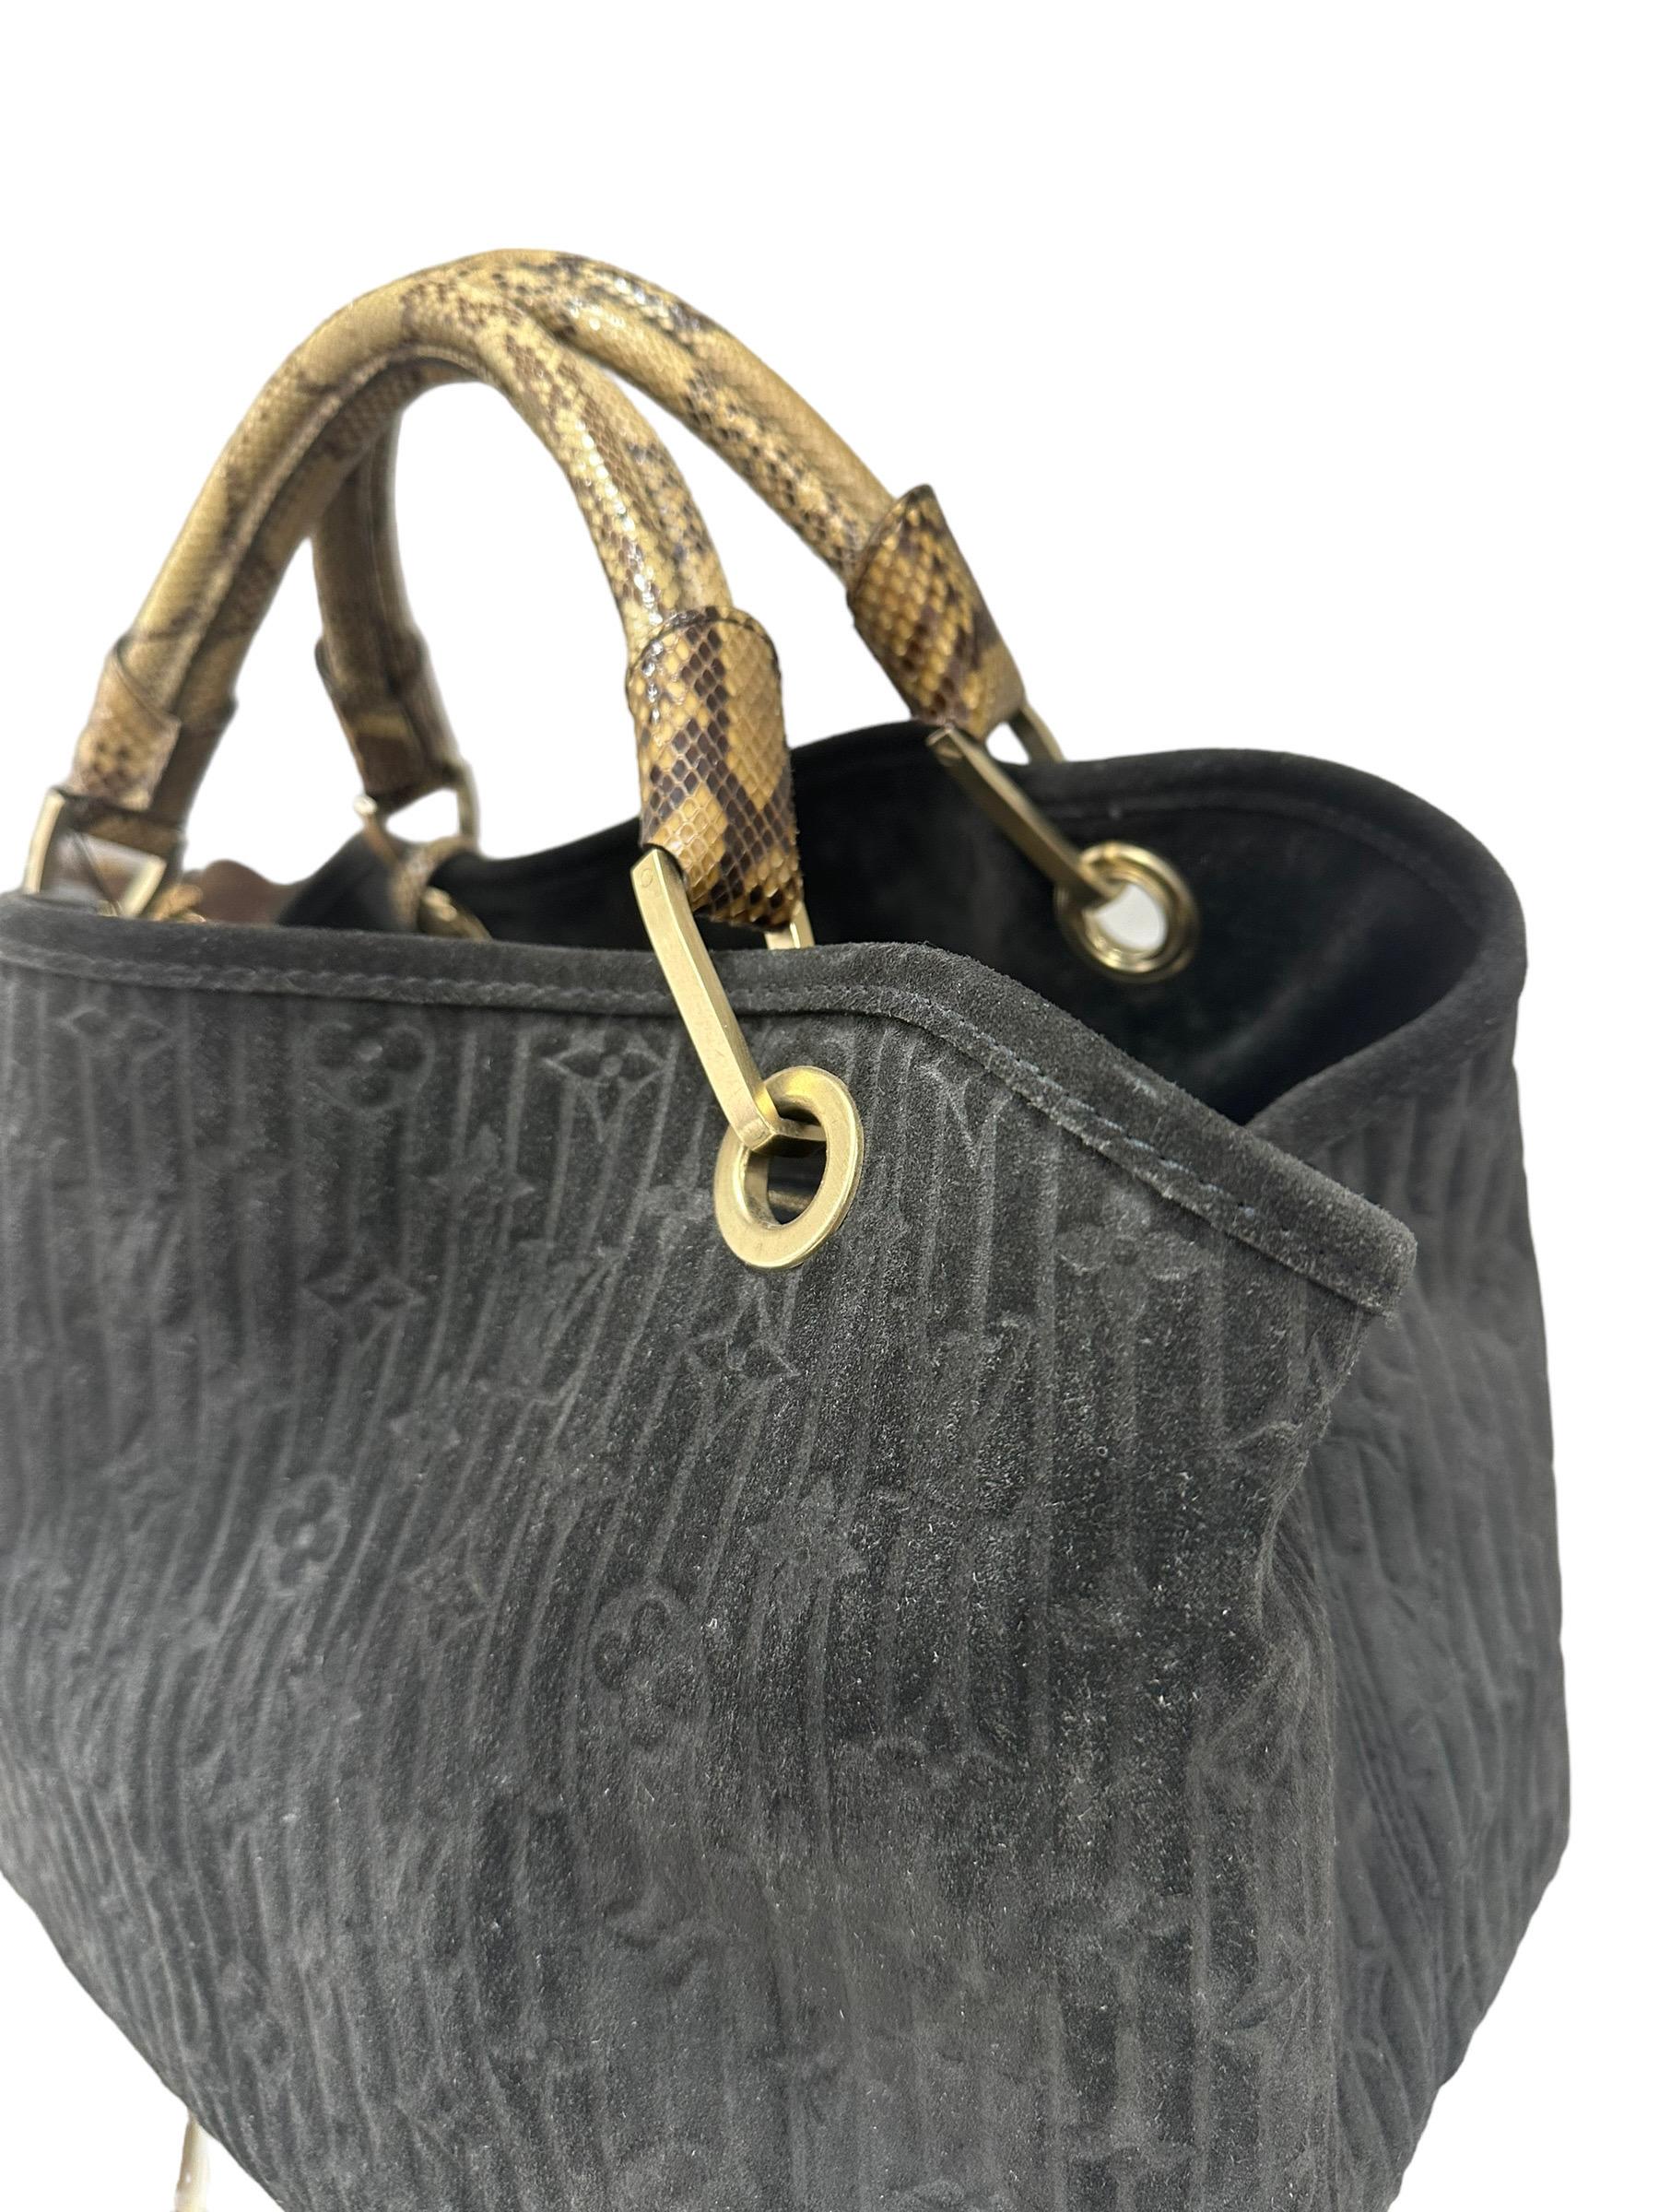 2008 Lousi Vuitton Whisper Black Suede Top Handle Bag Limited Edition For Sale 8